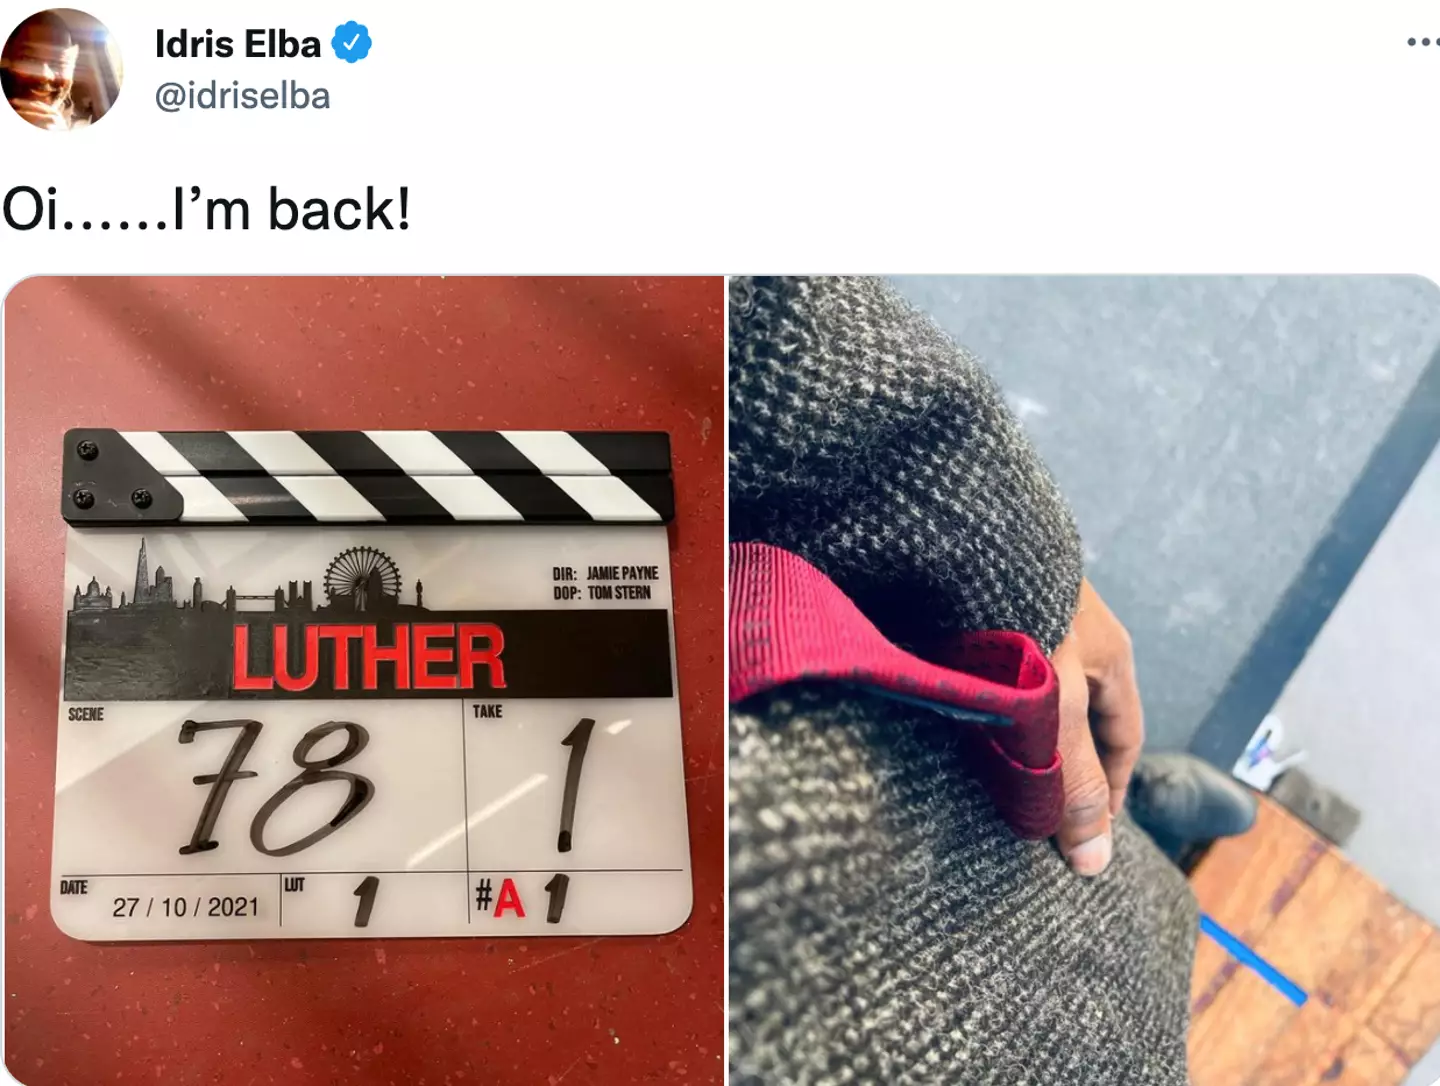 Idris Elba confirmed filming has begun (